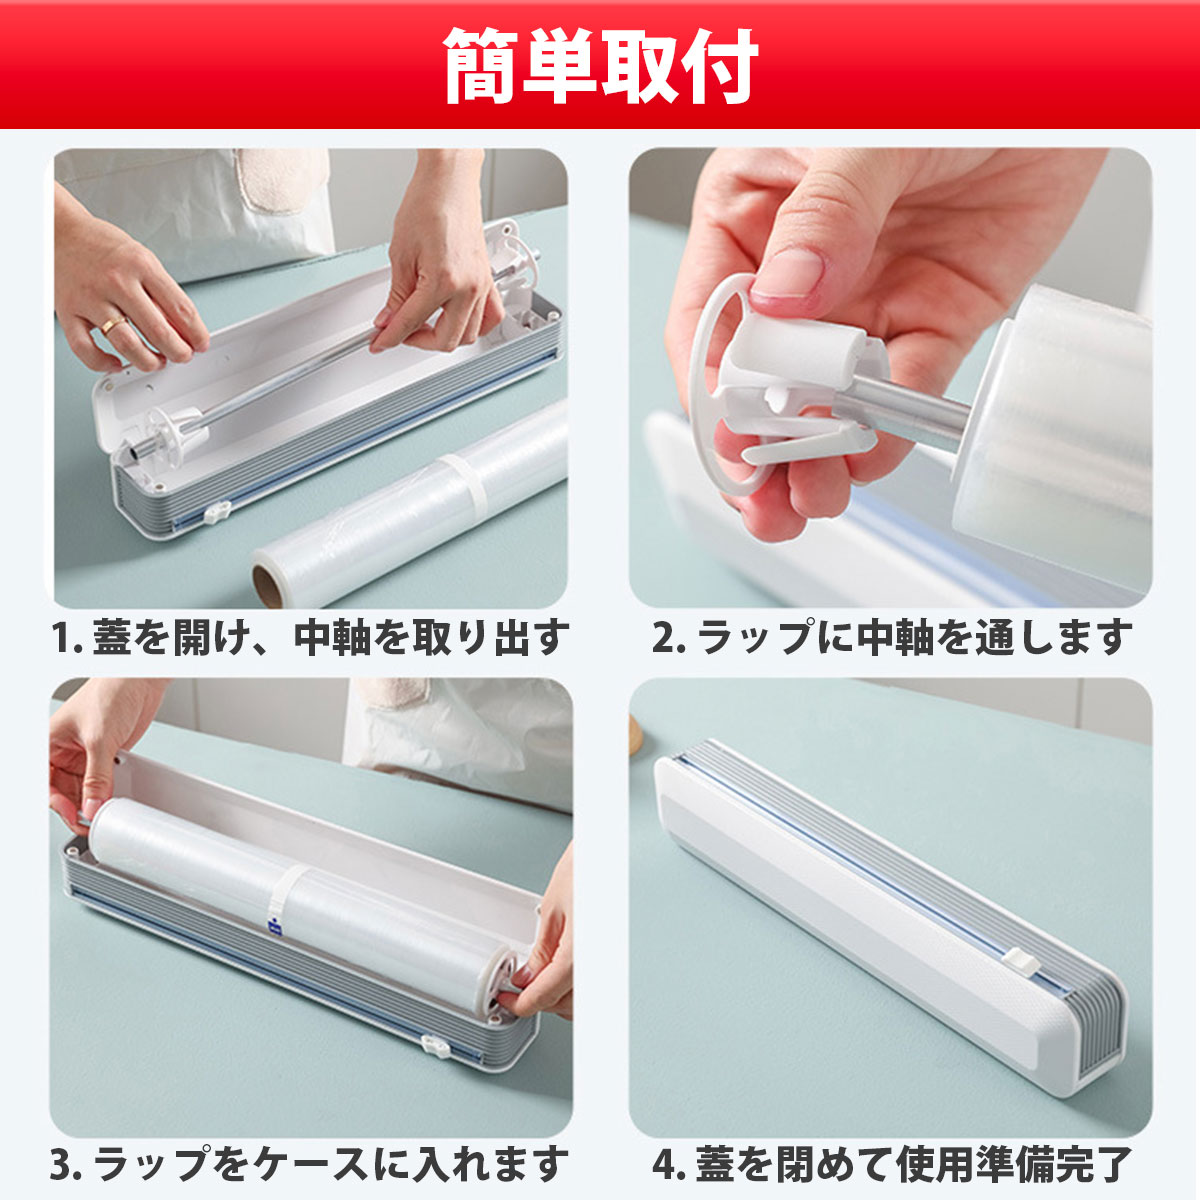  LAP case LAP holder sliding LAP cutter aluminium wheel cooking sheet kitchen LAP cut magnet storage refrigerator kitchen 